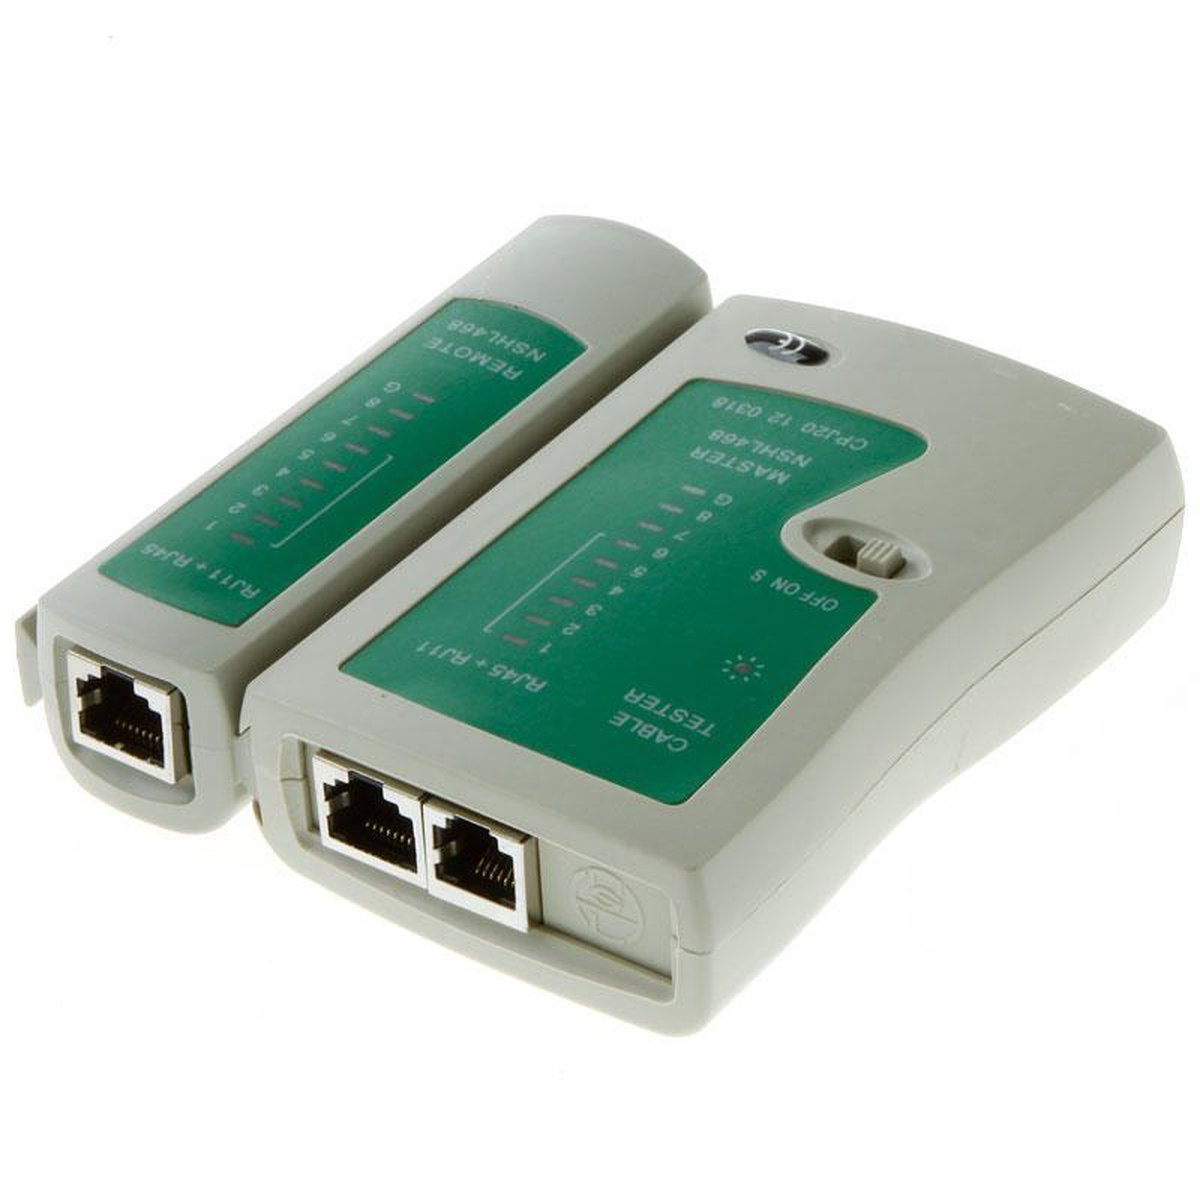 Premium UTP Kabel Tester - Voor RJ45 / RJ11 / Cat5e Netwerk Kabel | bol.com